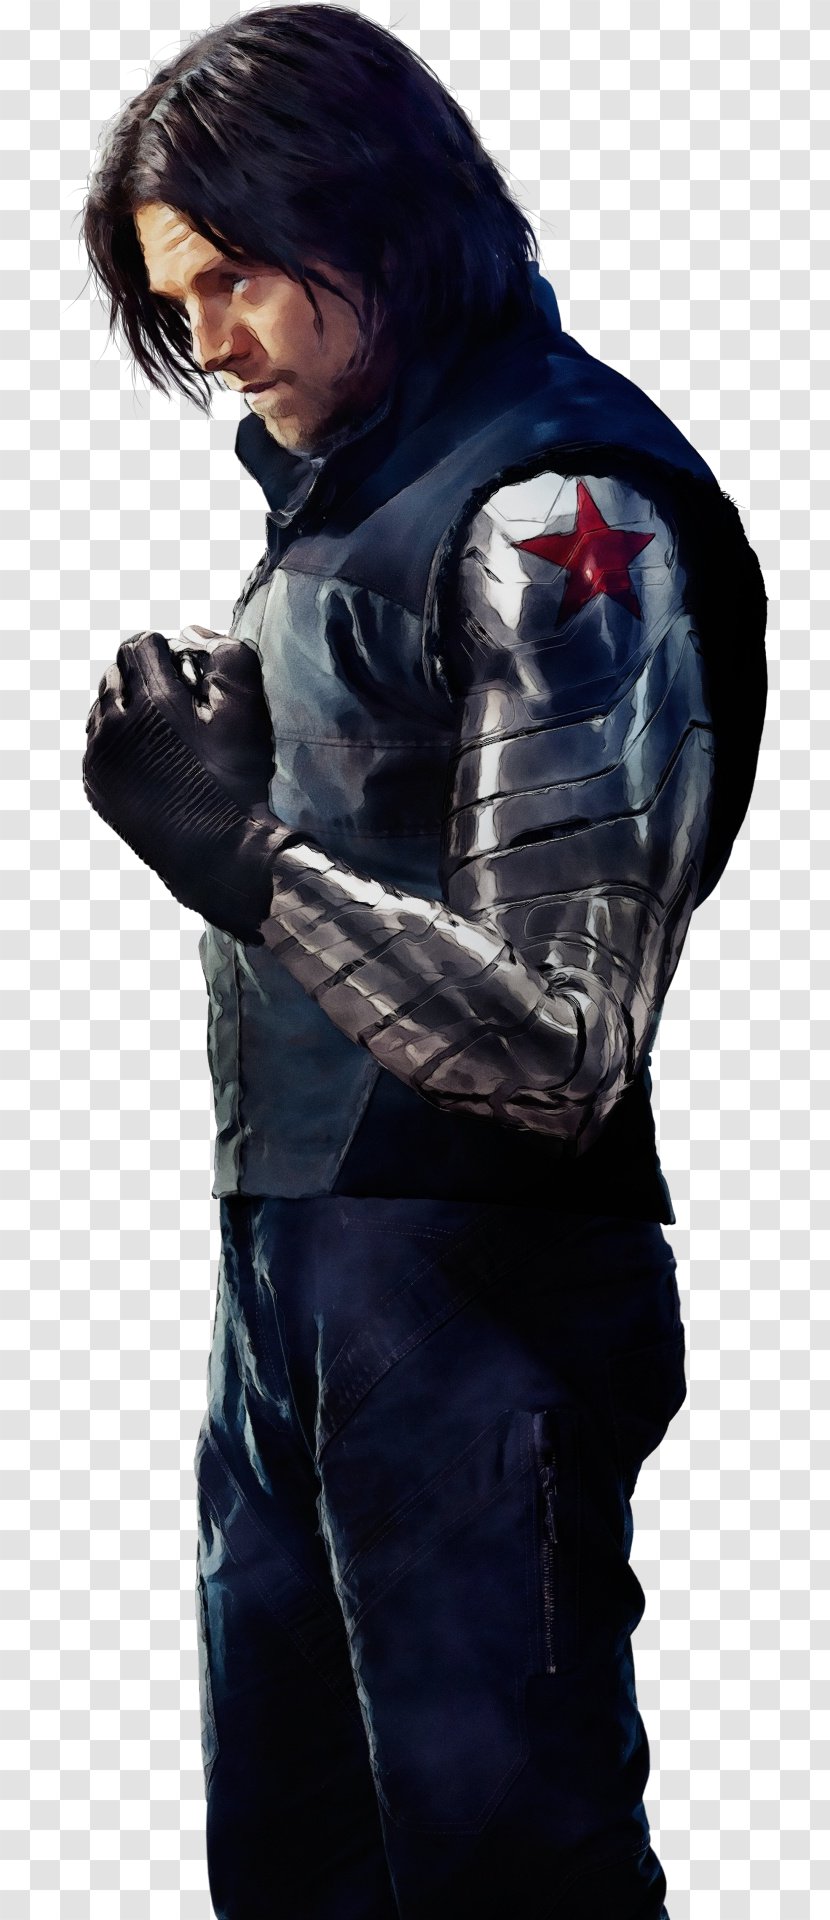 Bucky Barnes Captain America: The Winter Soldier Sebastian Stan Marvel Cinematic Universe Comics - Art - Personal Protective Equipment Transparent PNG